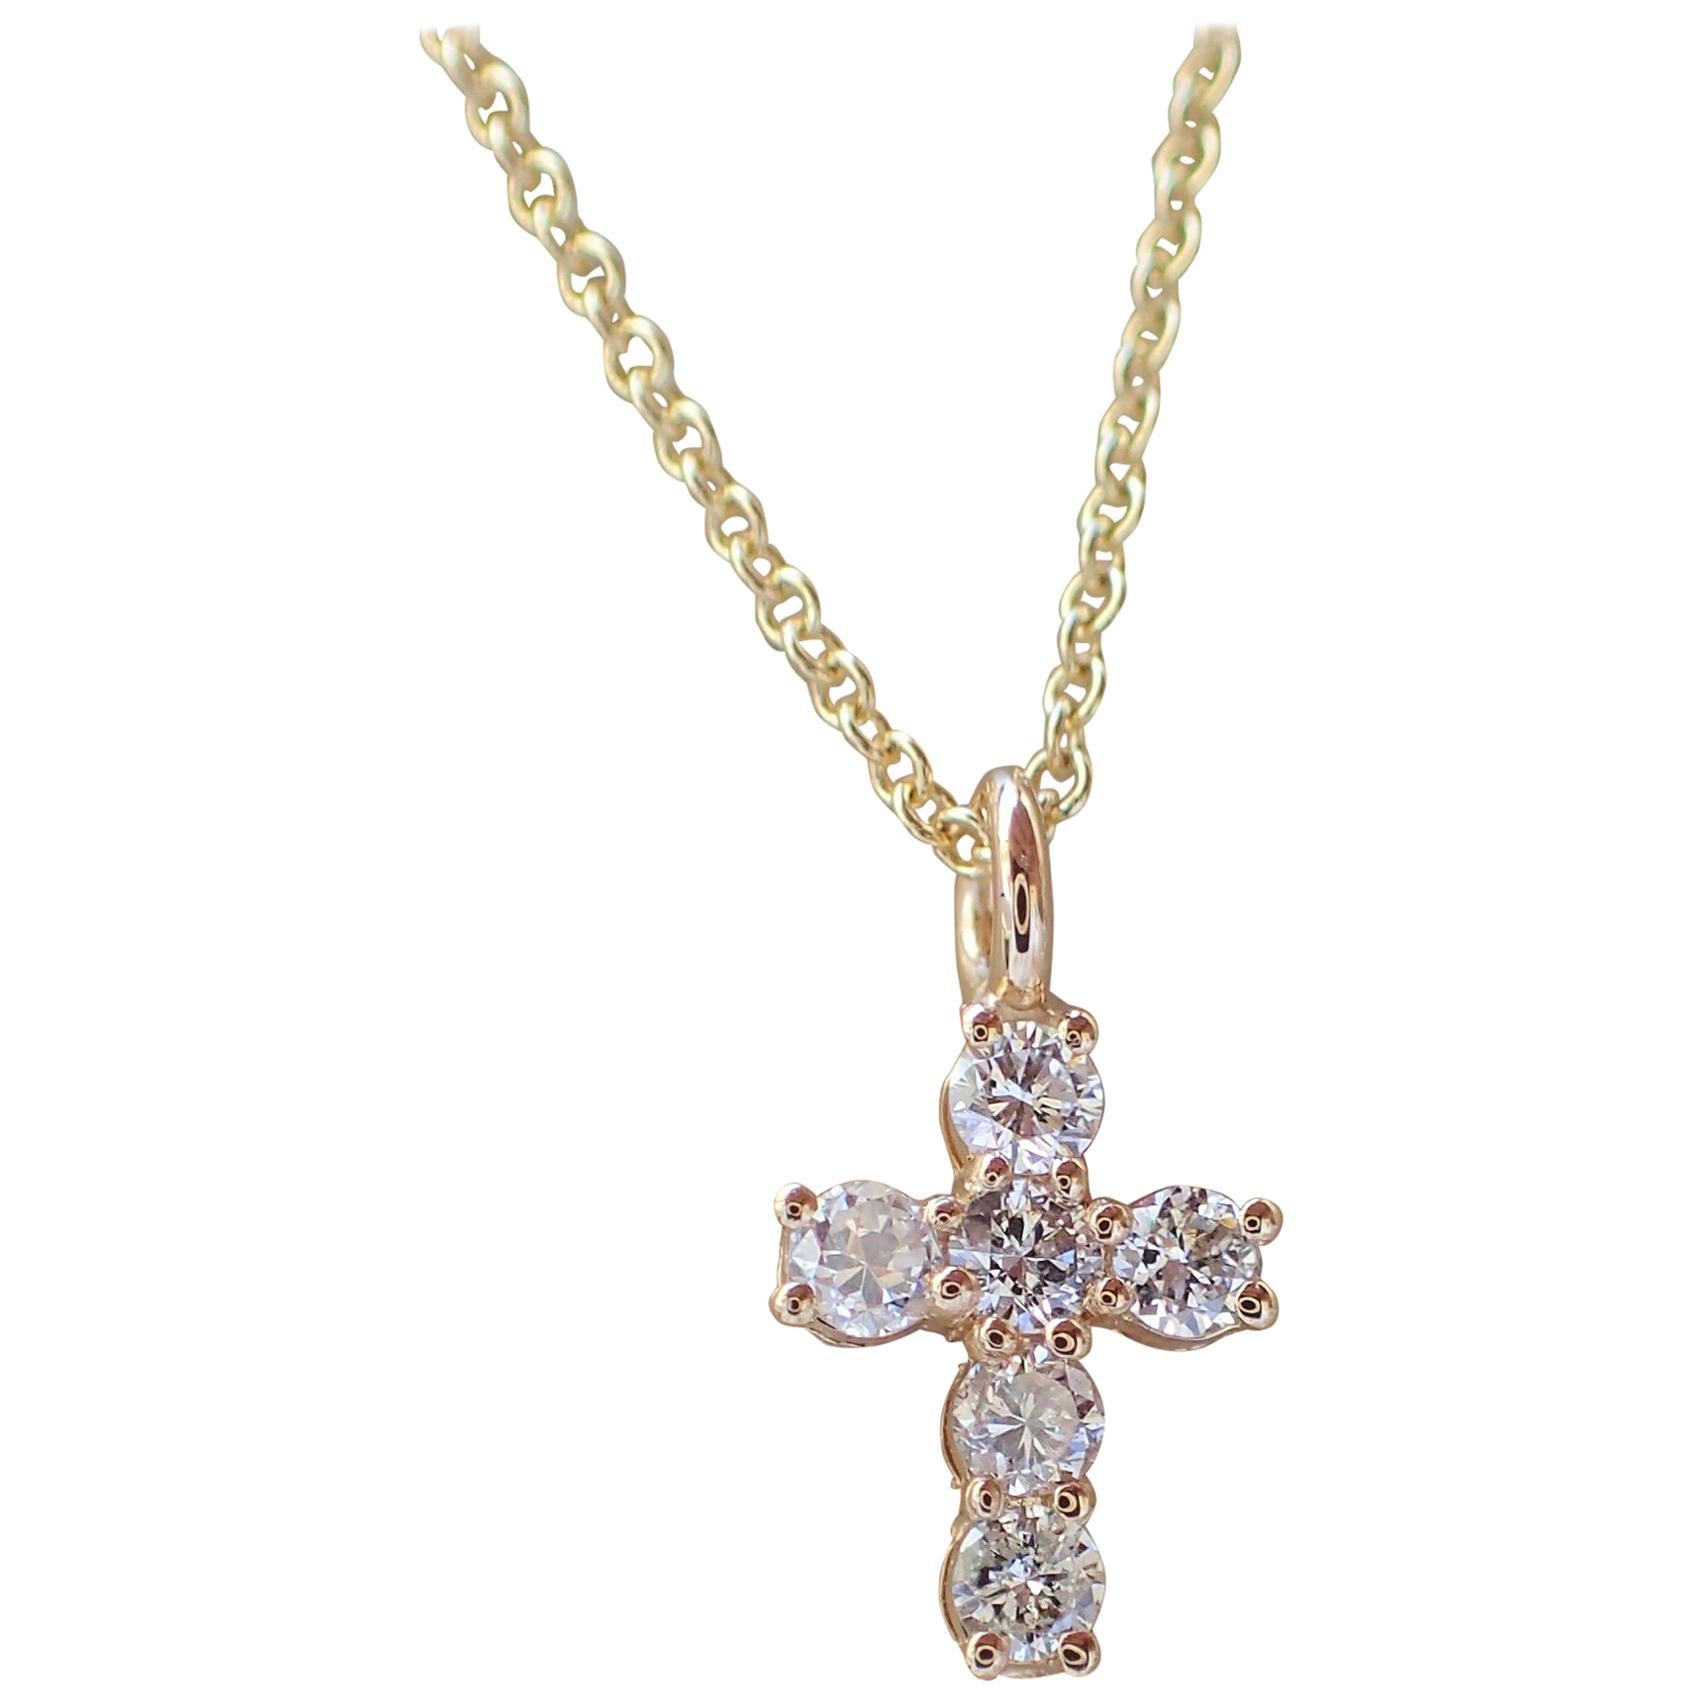 18 Karat Gold Tiny Cross with 0.30 Carat of Diamond Hangs on Chain